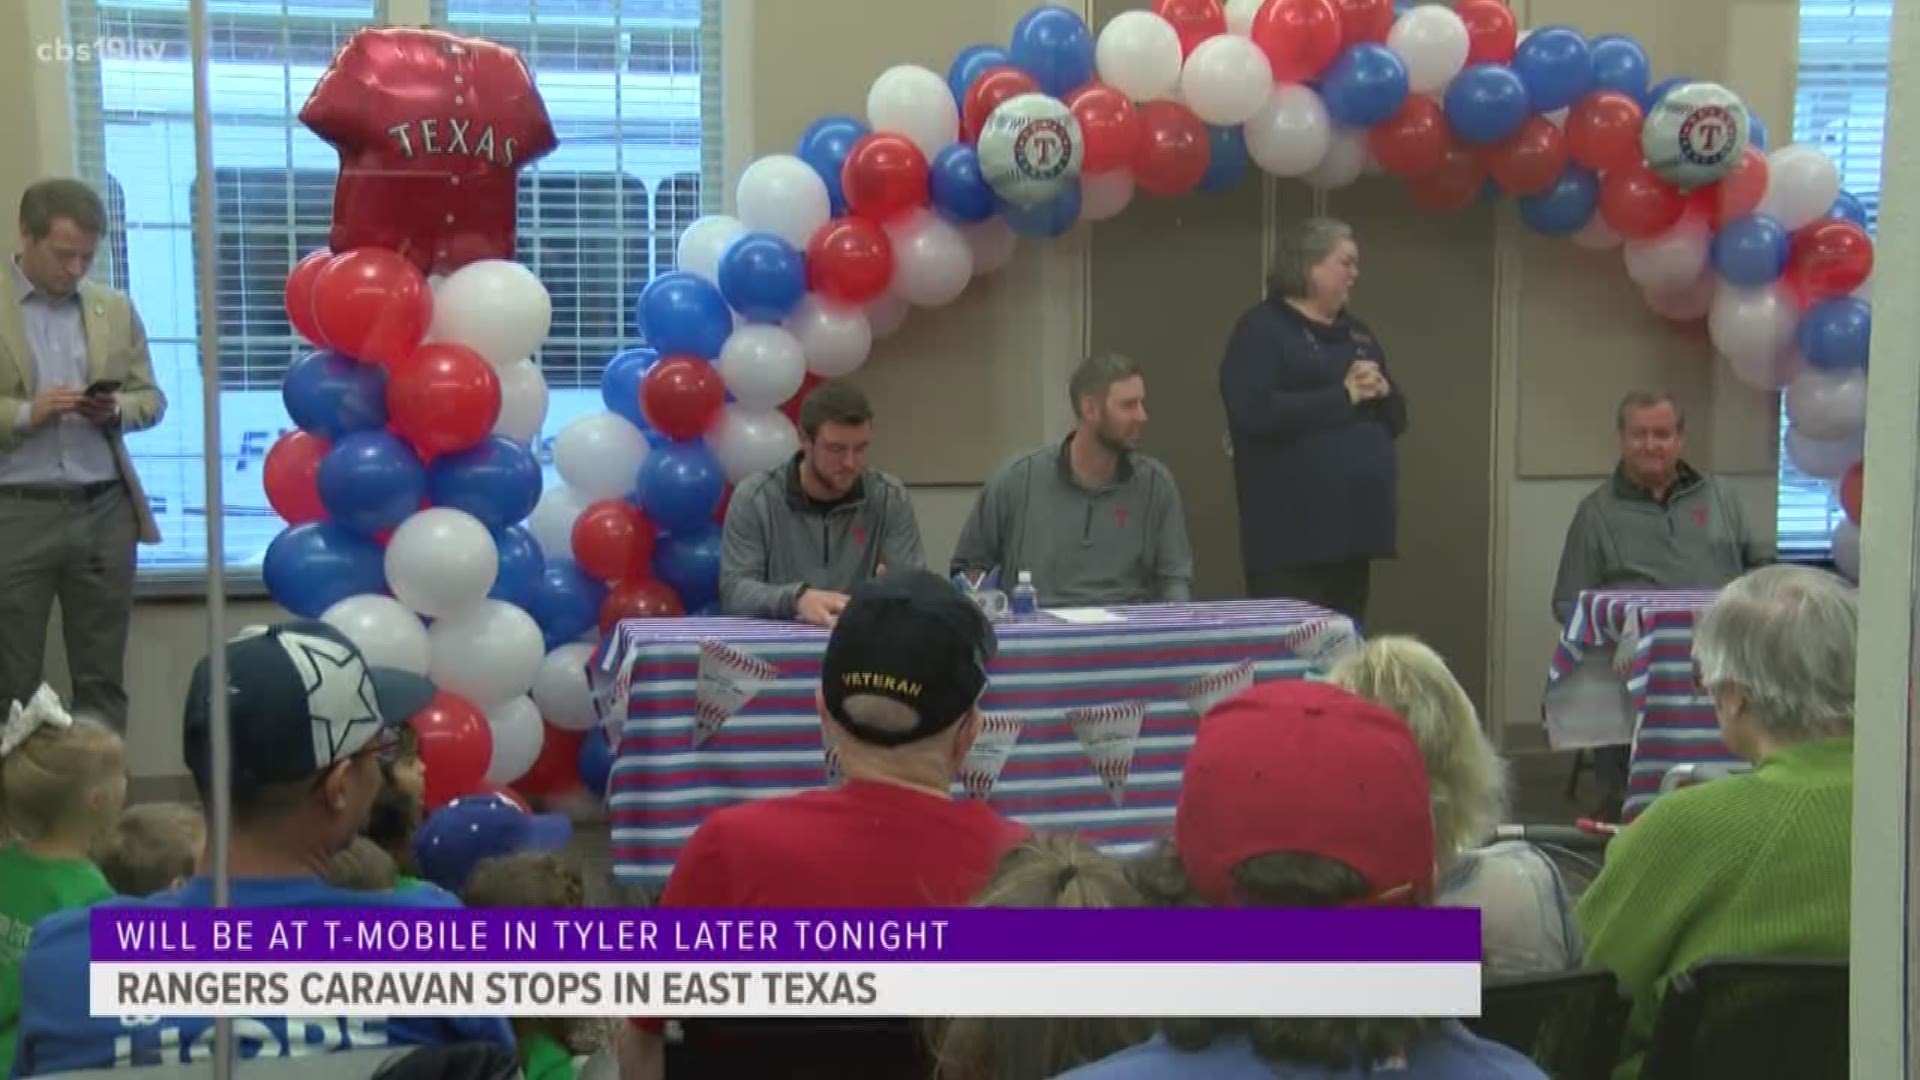 The Rangers caravan rolled through East Texas on Tuesday.